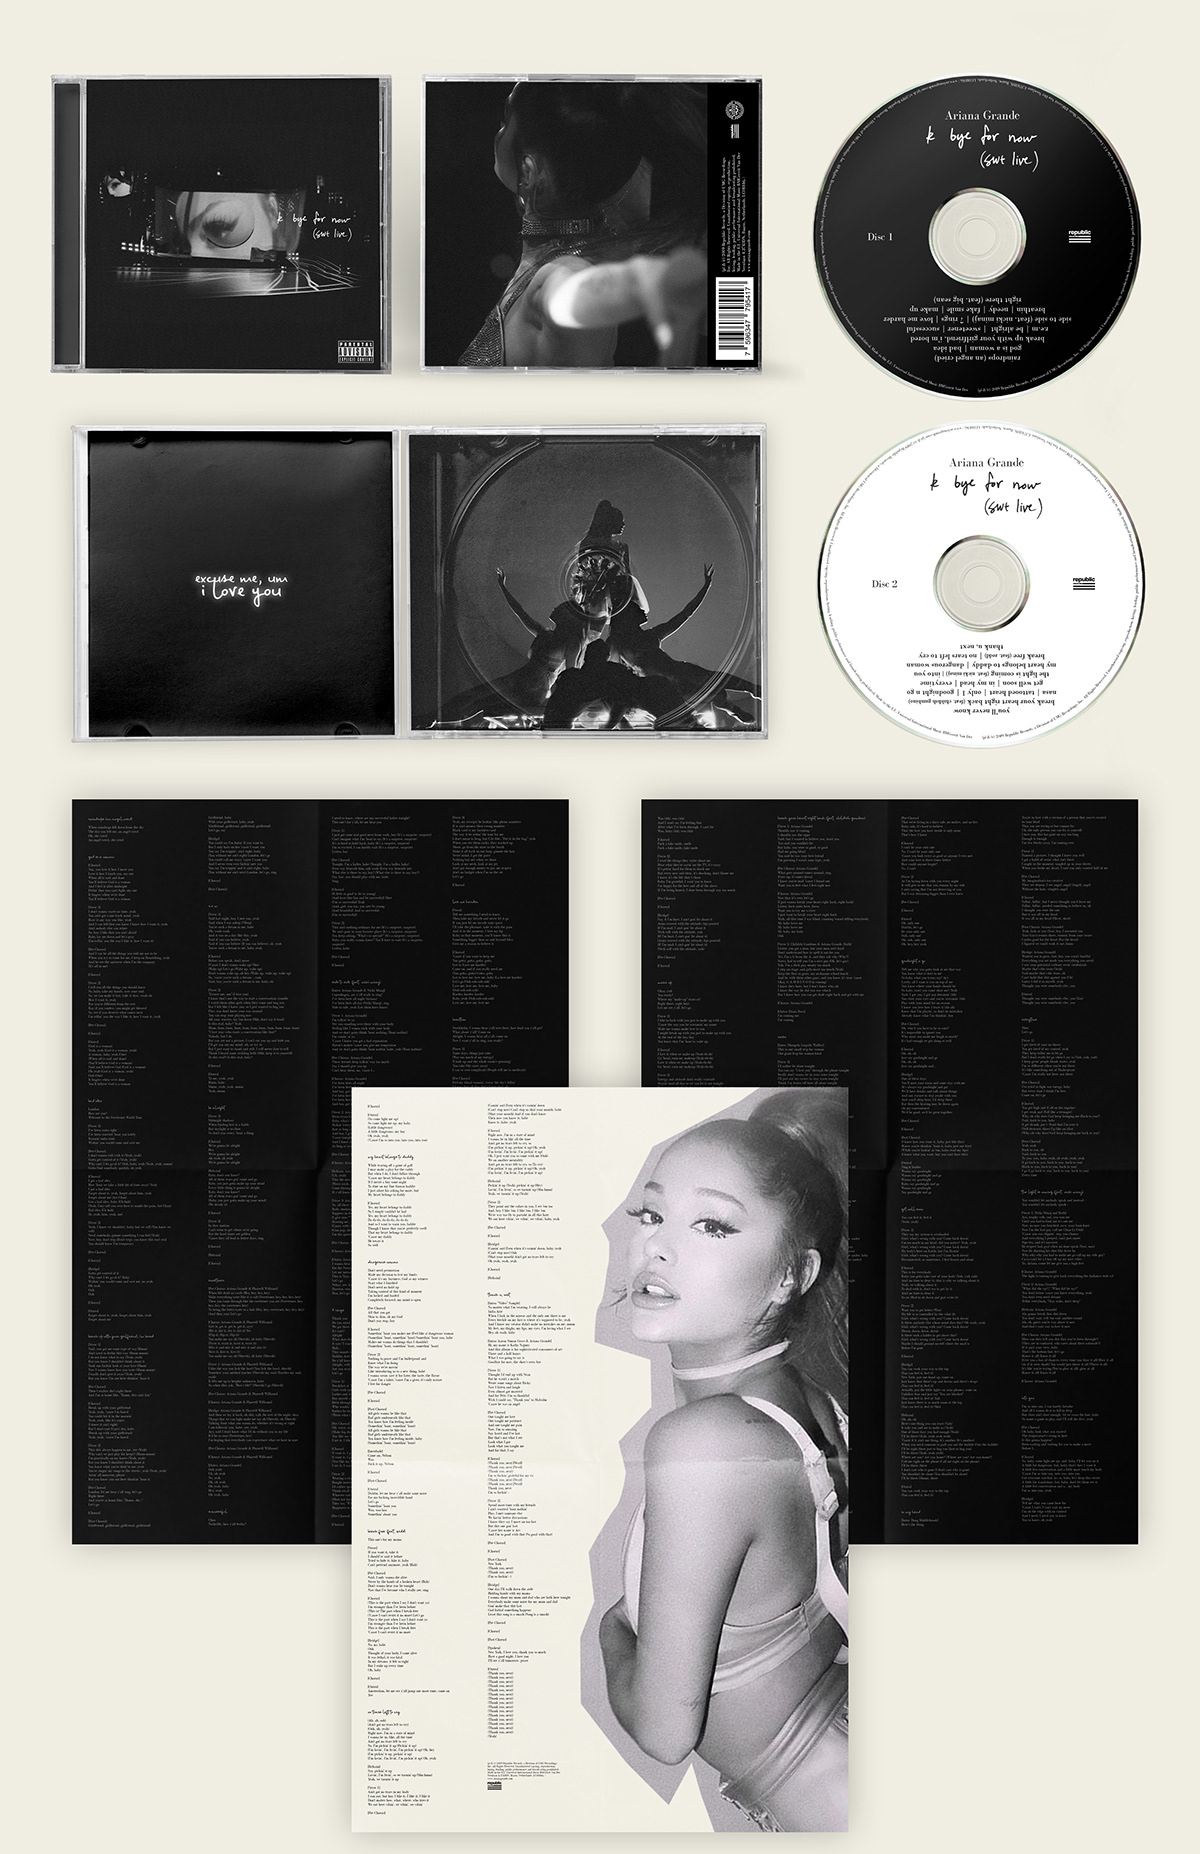 Ariana Grande - K bye for now (CD Redesign) on Behance